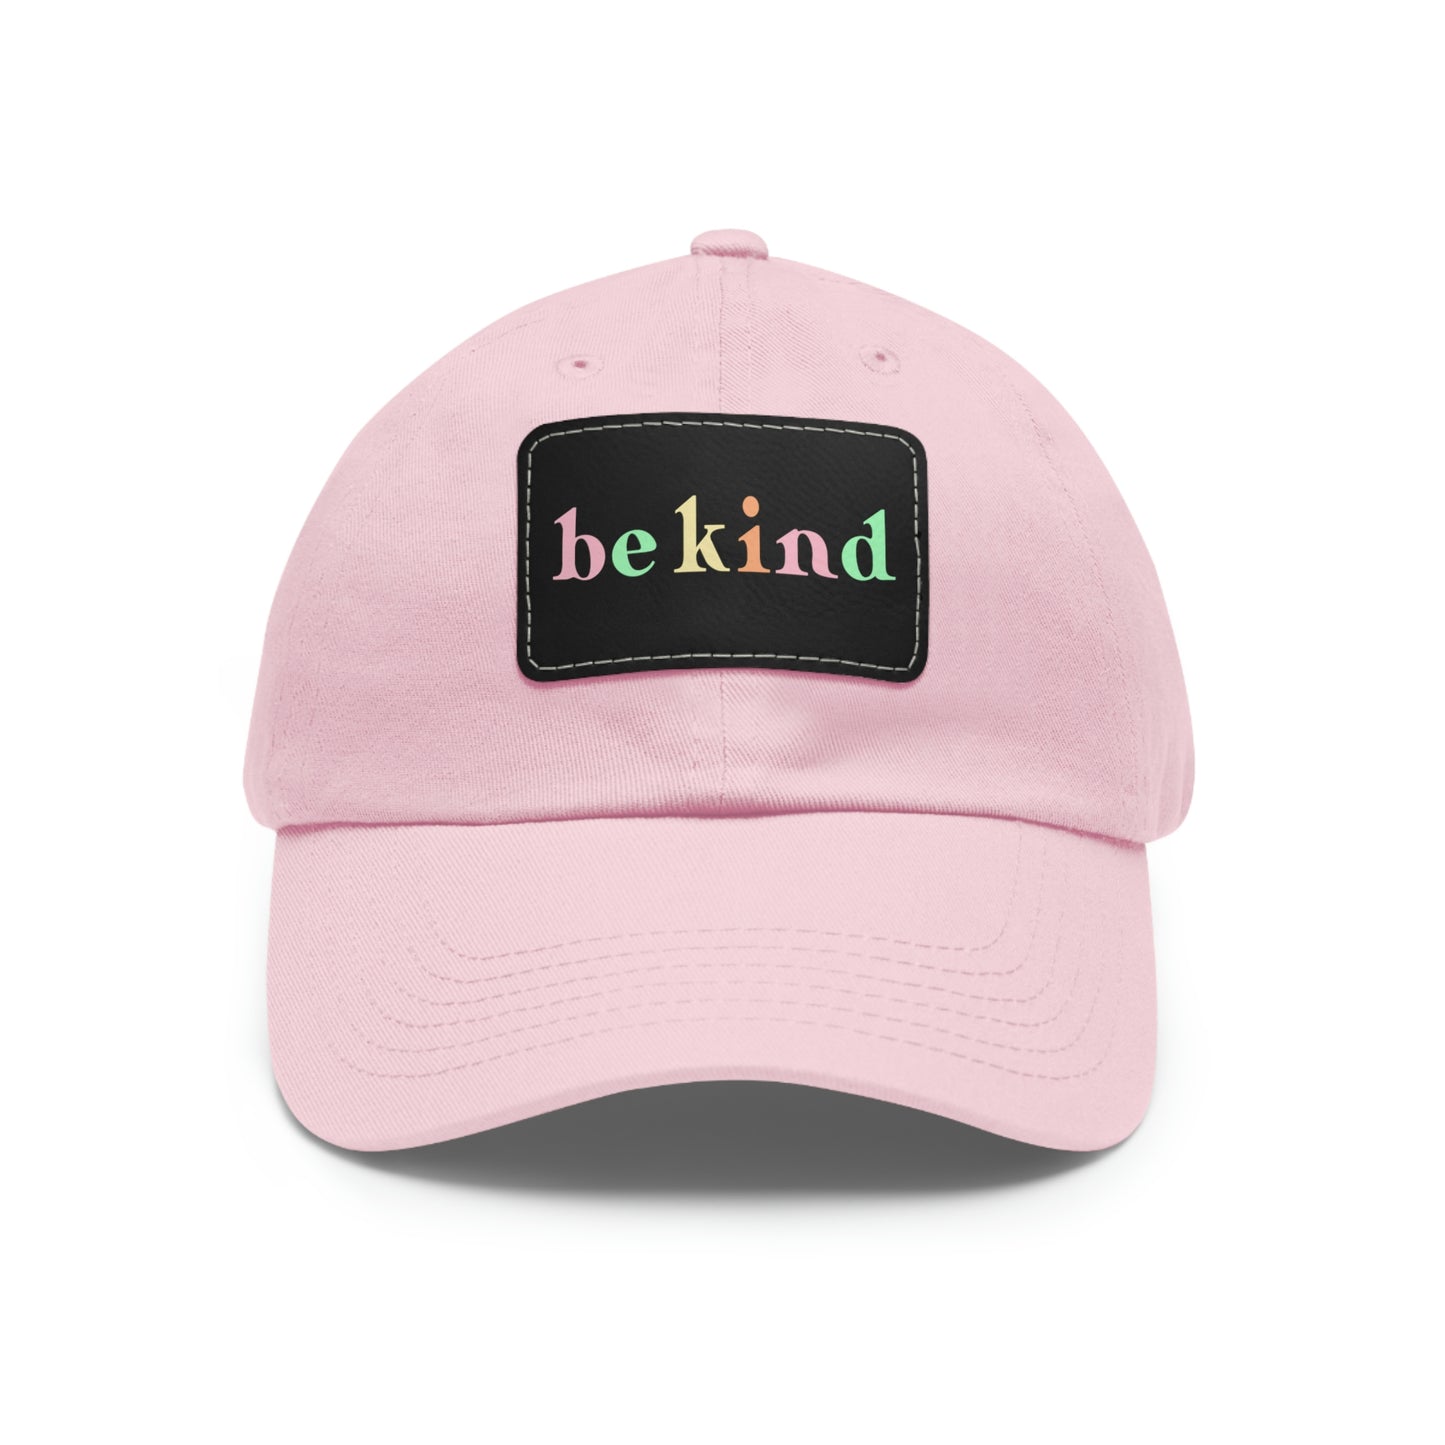 "be kind" Leather Patch Design Cap